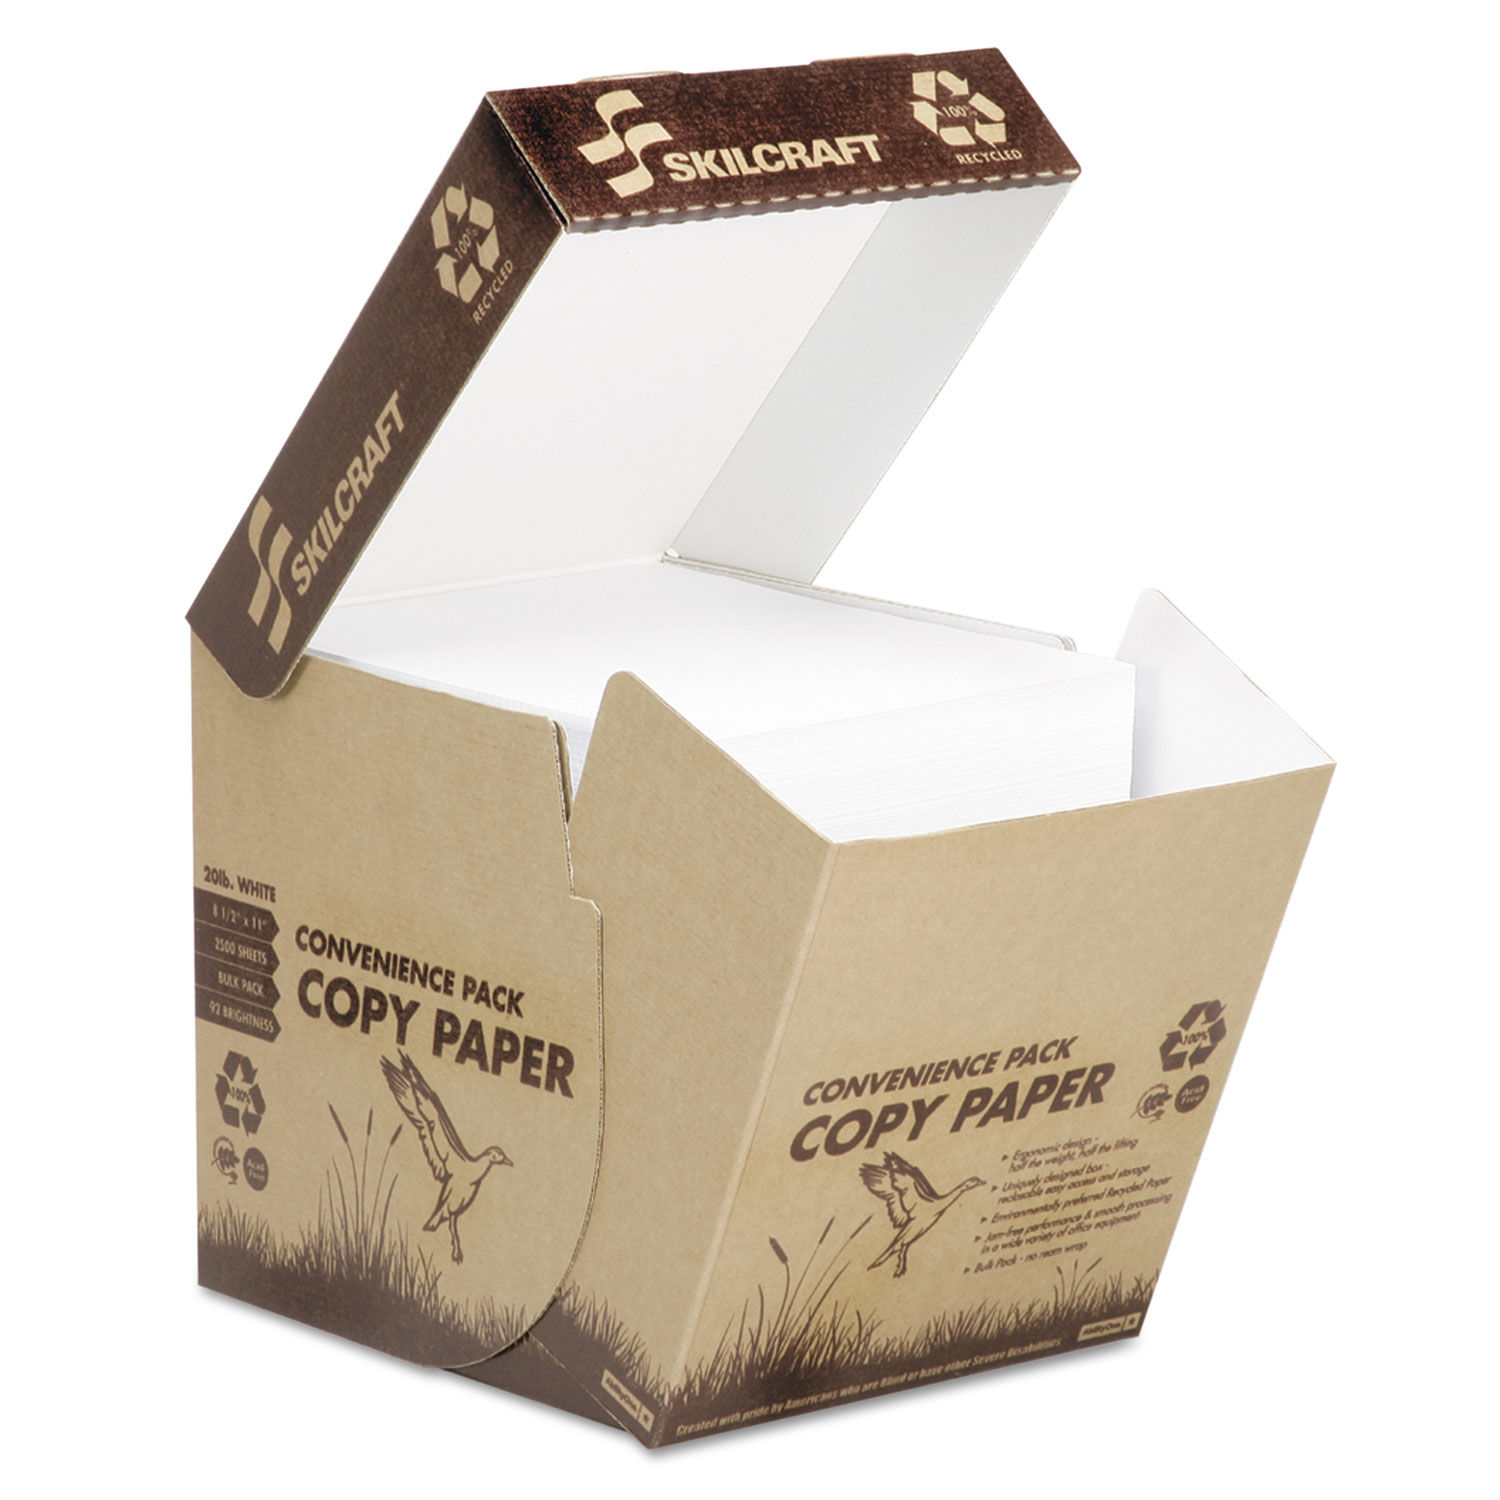 SKILCRAFT Recycled Copy Paper 92 Bright, 20 lb Bond Weight, 8.5 x 11, White, 2,500/Carton, GSA 753001611027